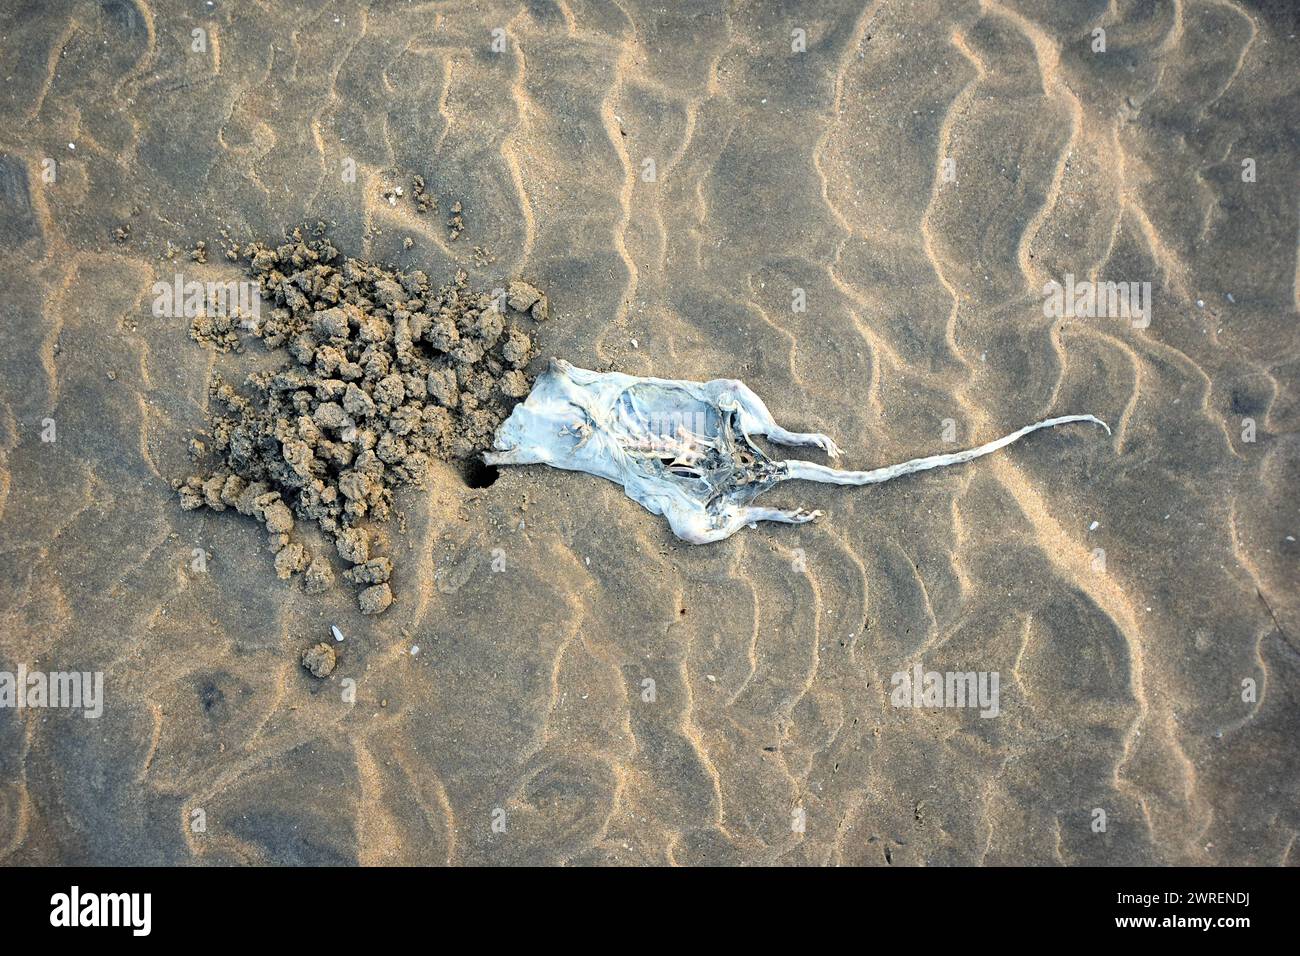 DATE D'ENREGISTREMENT NON INDIQUÉE Strandkadaver Kadaver einer Ratte am Strand Kumta Karnataka Indien *** carcasse de plage carcasse d'un rat sur la plage Kumta Karnataka Inde Banque D'Images